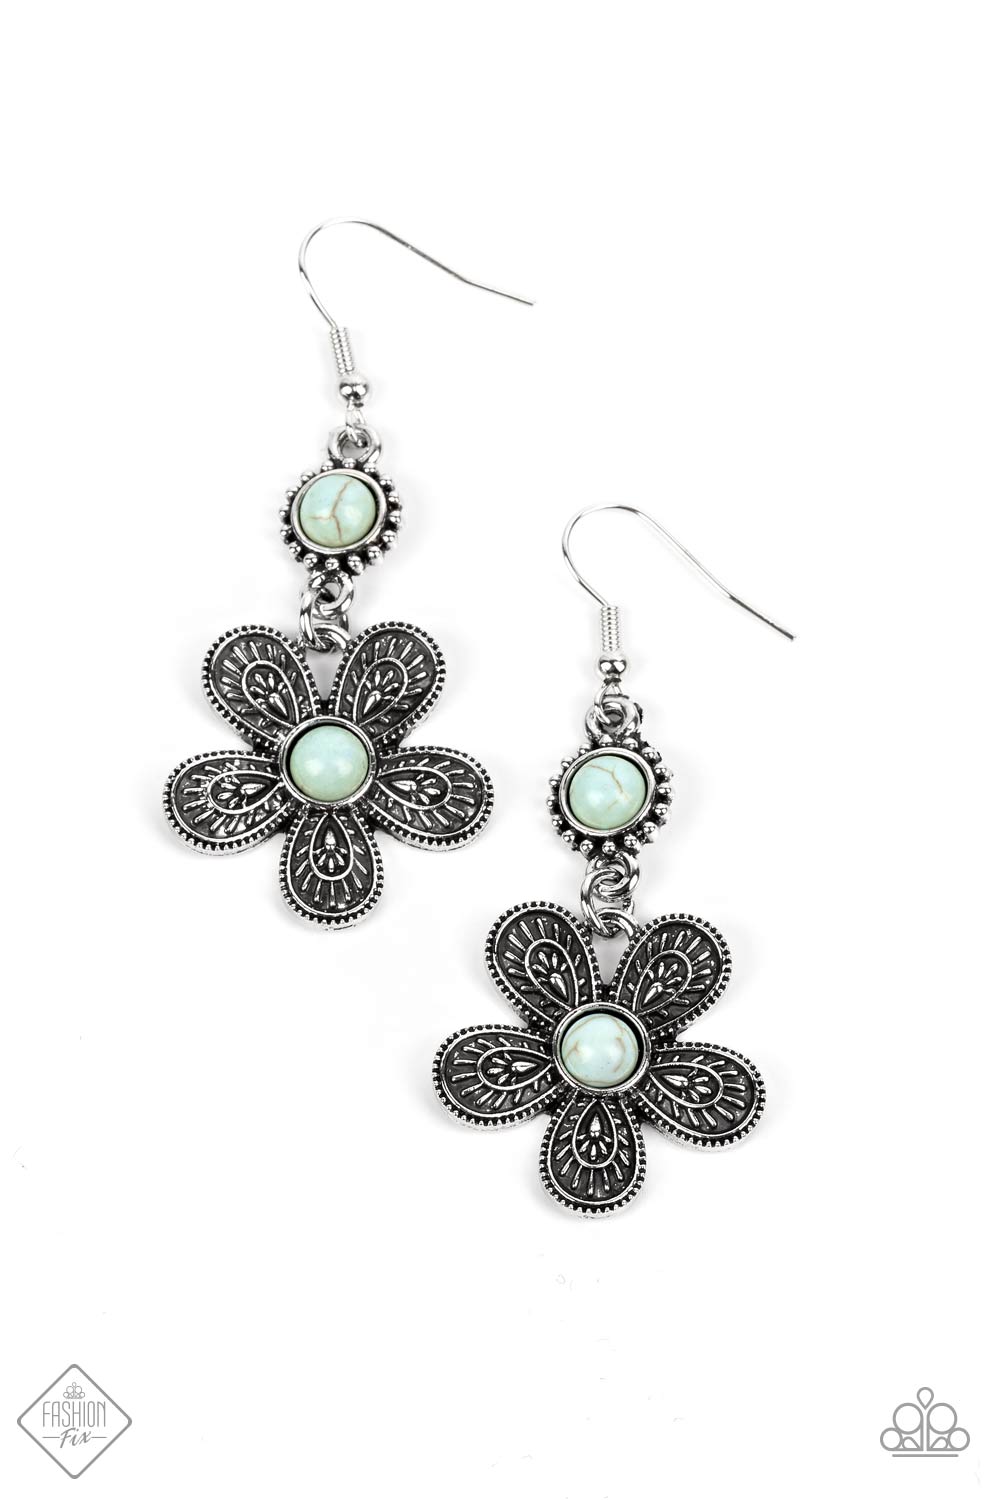 Free-Spirited Flourish Blue Stone Flower Earrings - Paparazzi Accessories- lightbox - CarasShop.com - $5 Jewelry by Cara Jewels